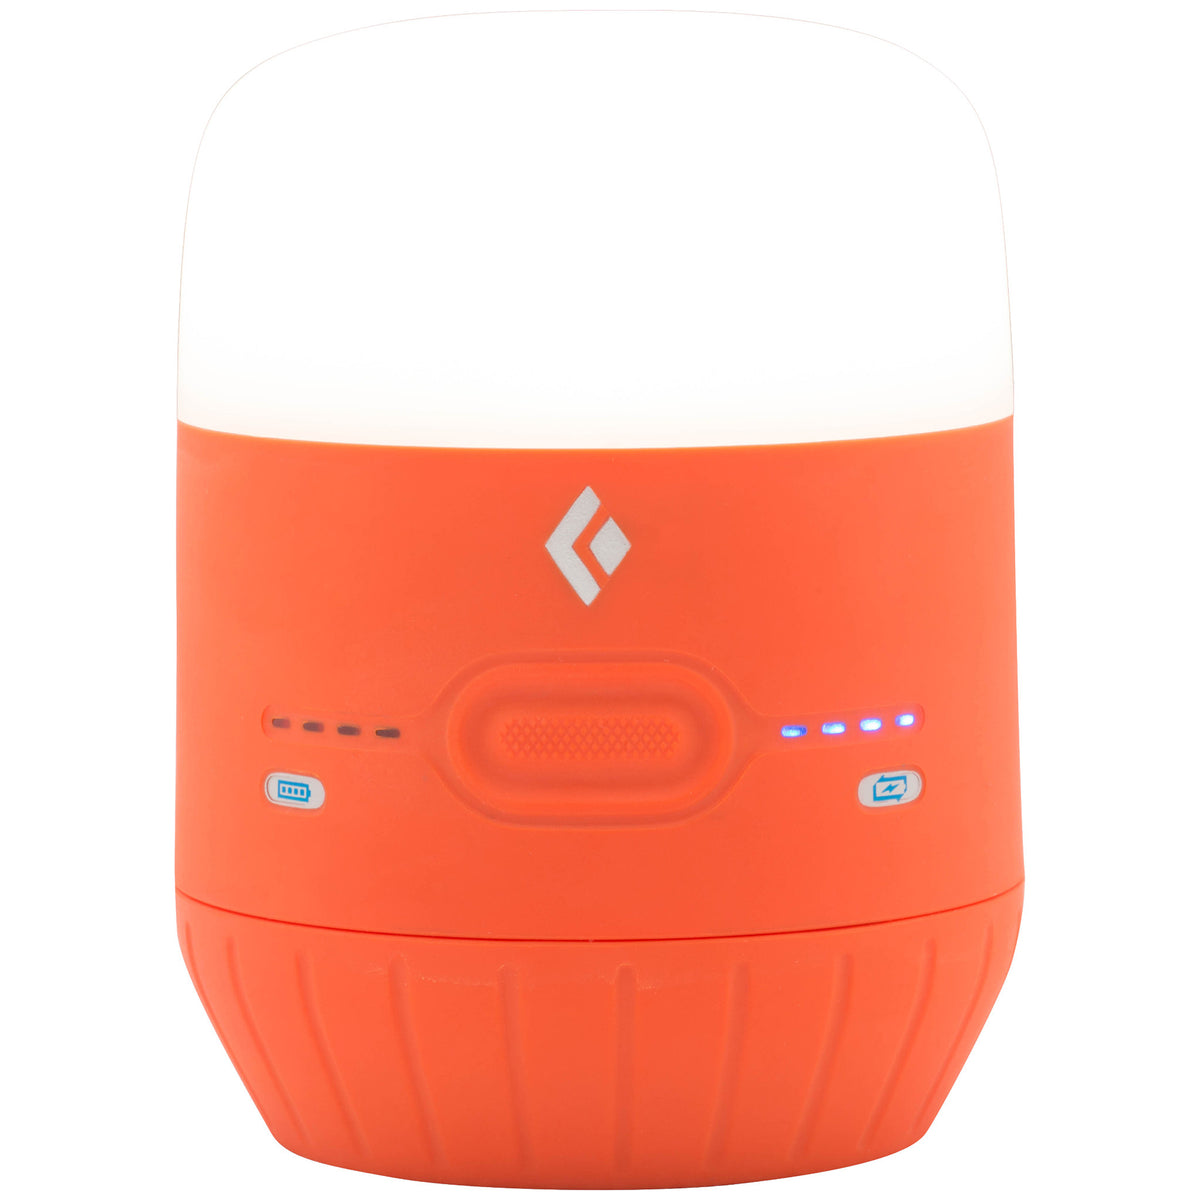 orange lantern in off mode showing battery levels